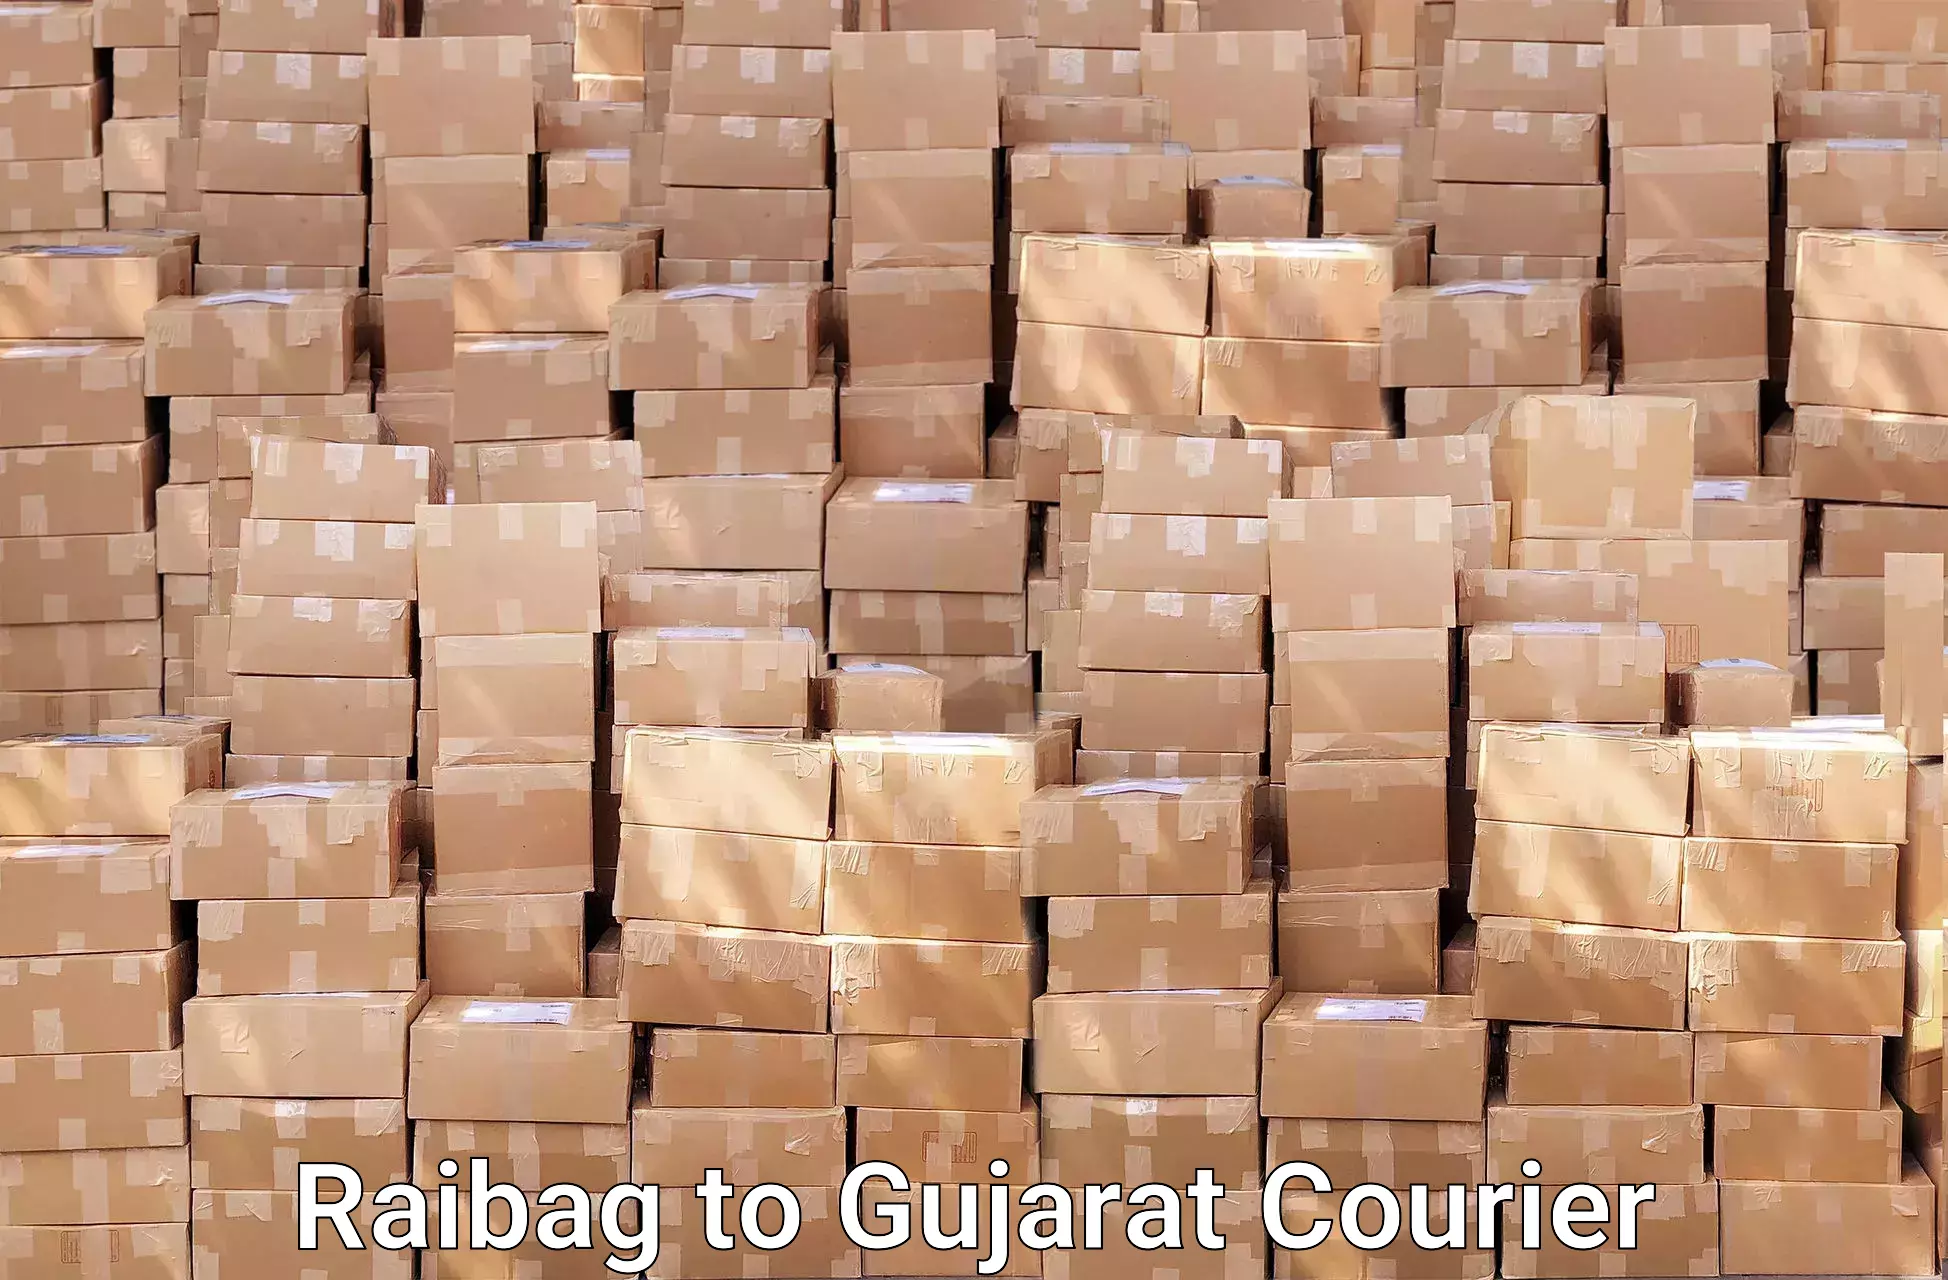 Professional moving assistance Raibag to Gujarat